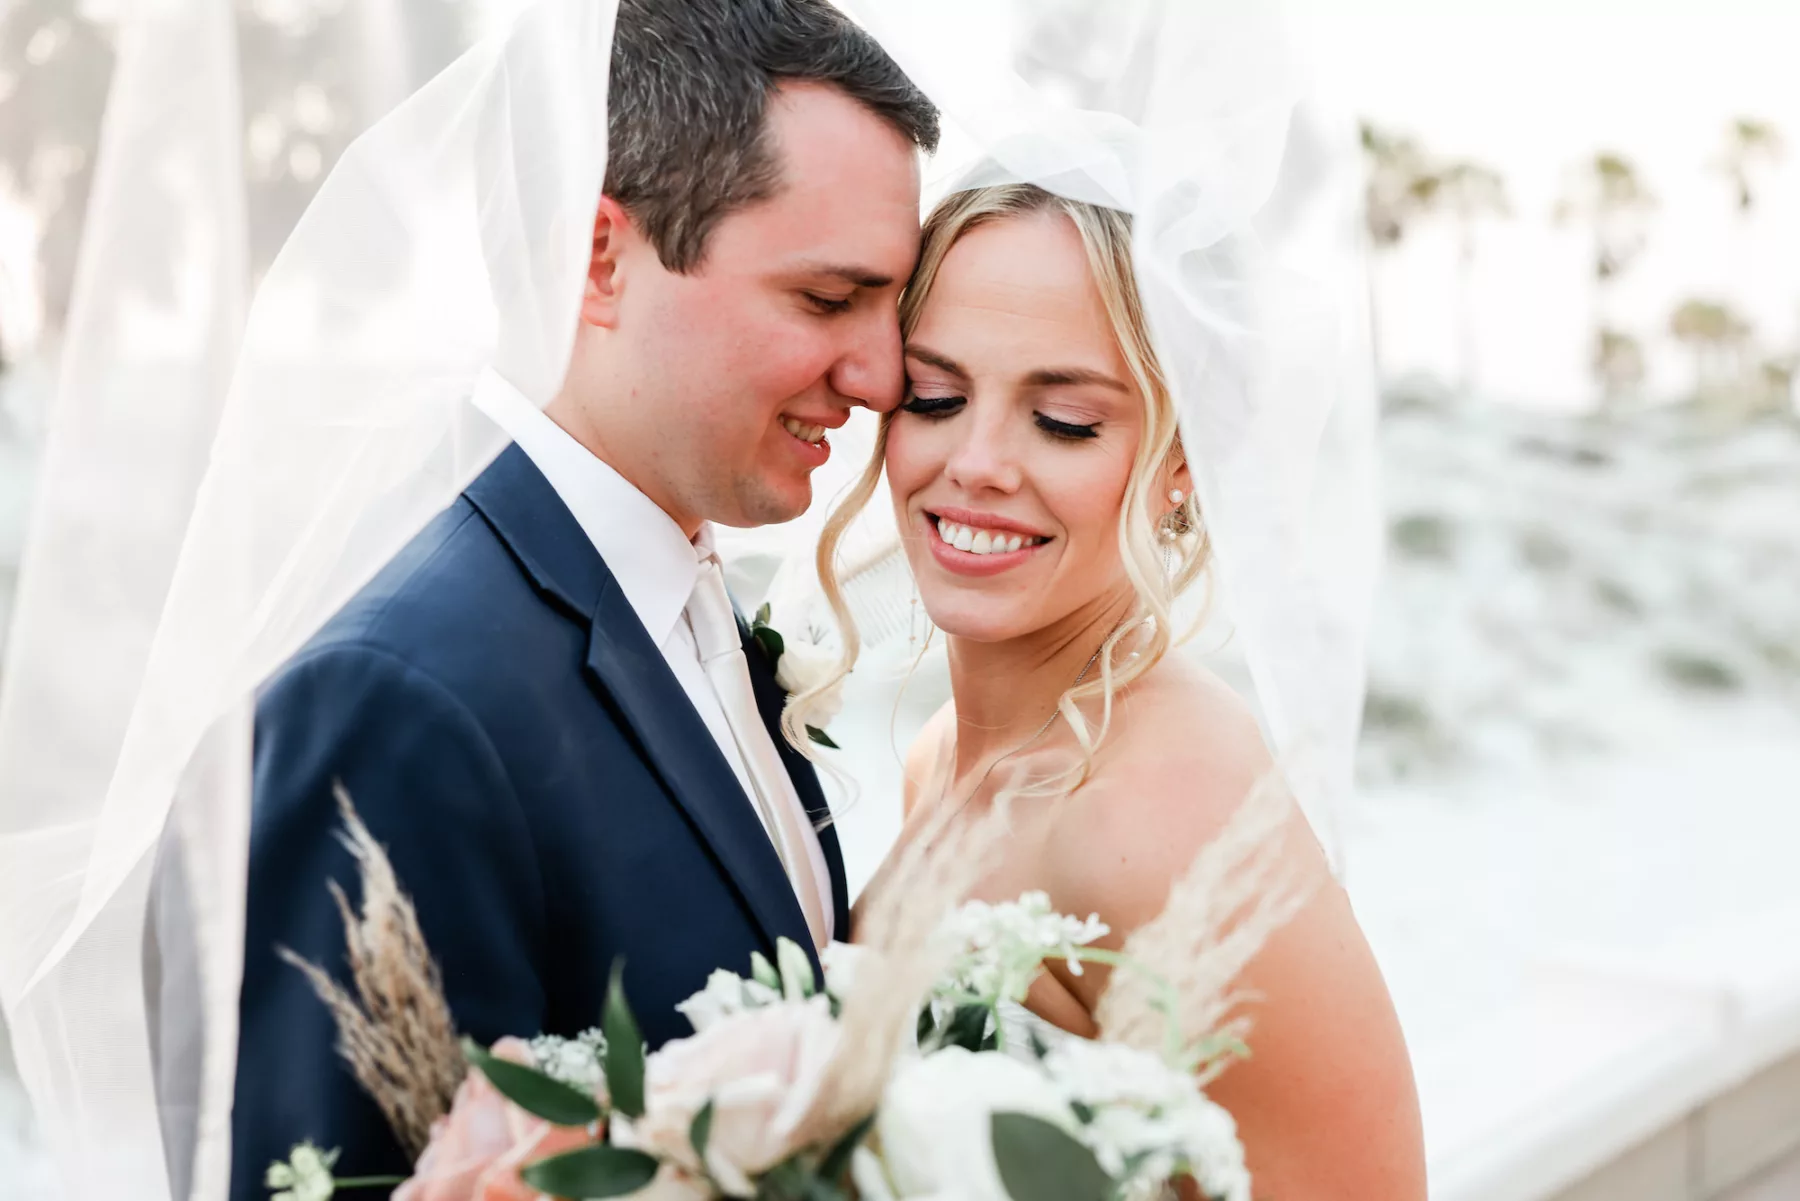 Bride and Groom Beach Wedding Portrait | Tampa Bay Photographer Lifelong Photography Studio